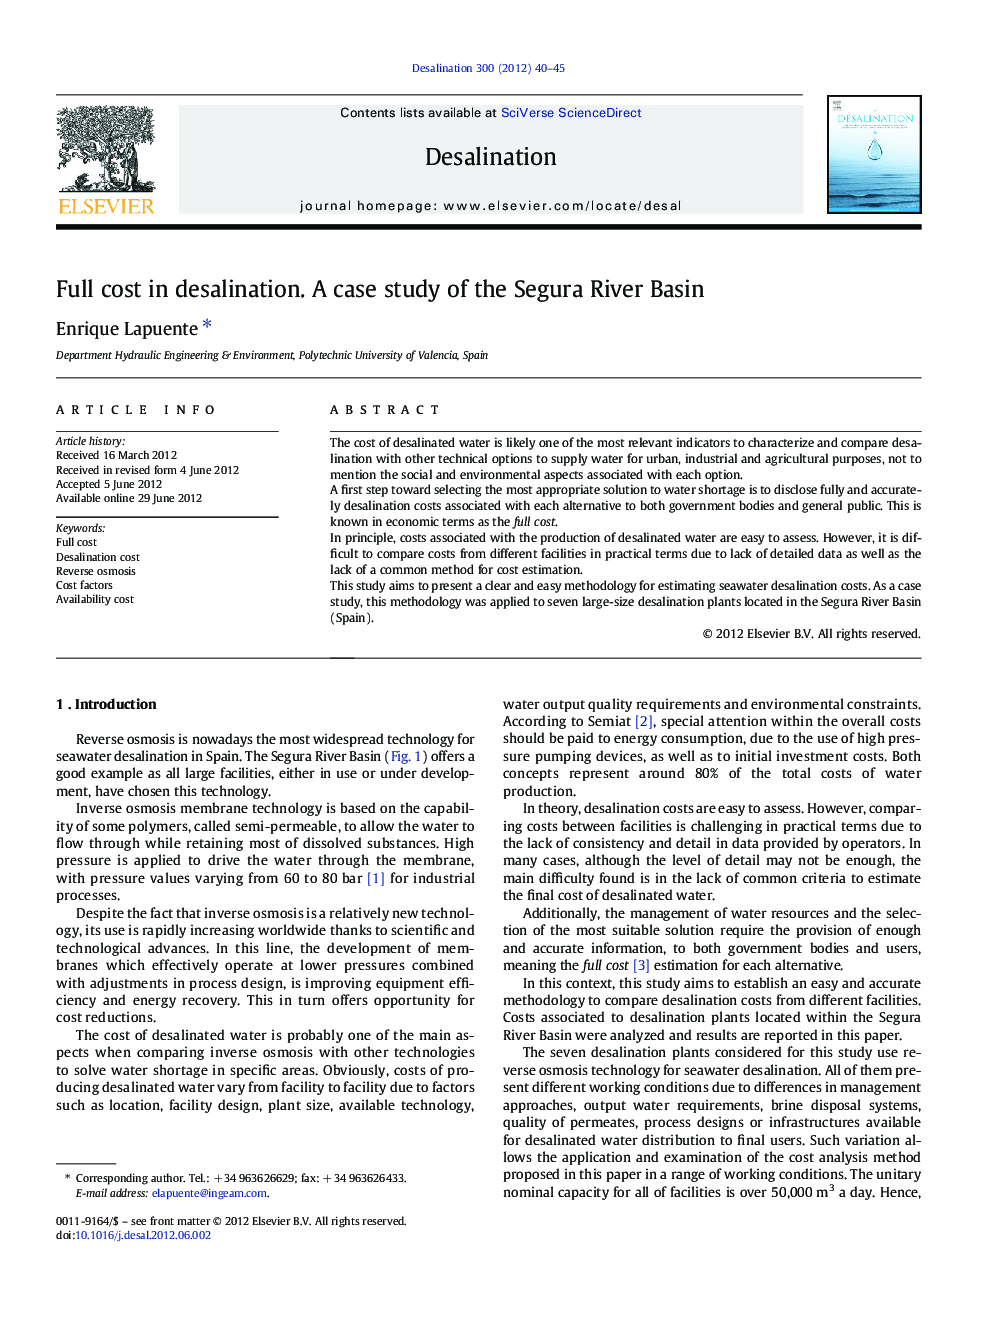 Full cost in desalination. A case study of the Segura River Basin